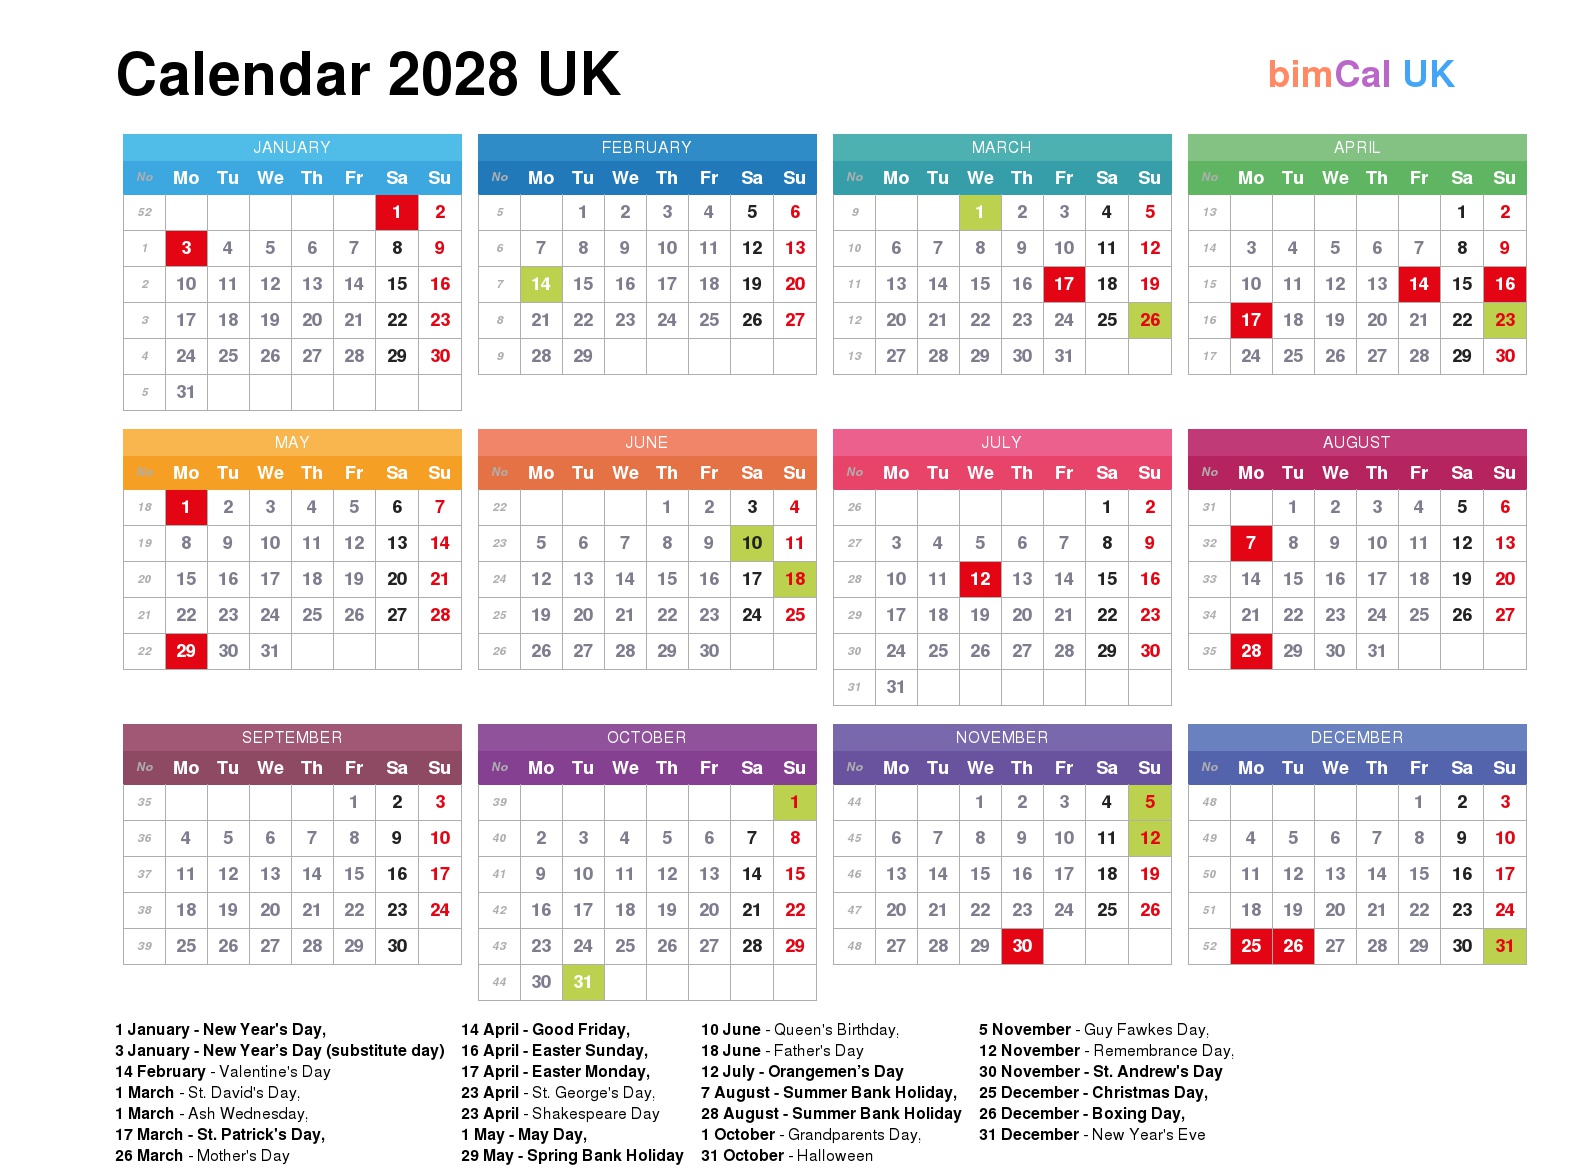 Calendar 2028 UK - bimCal.uk 🇬🇧